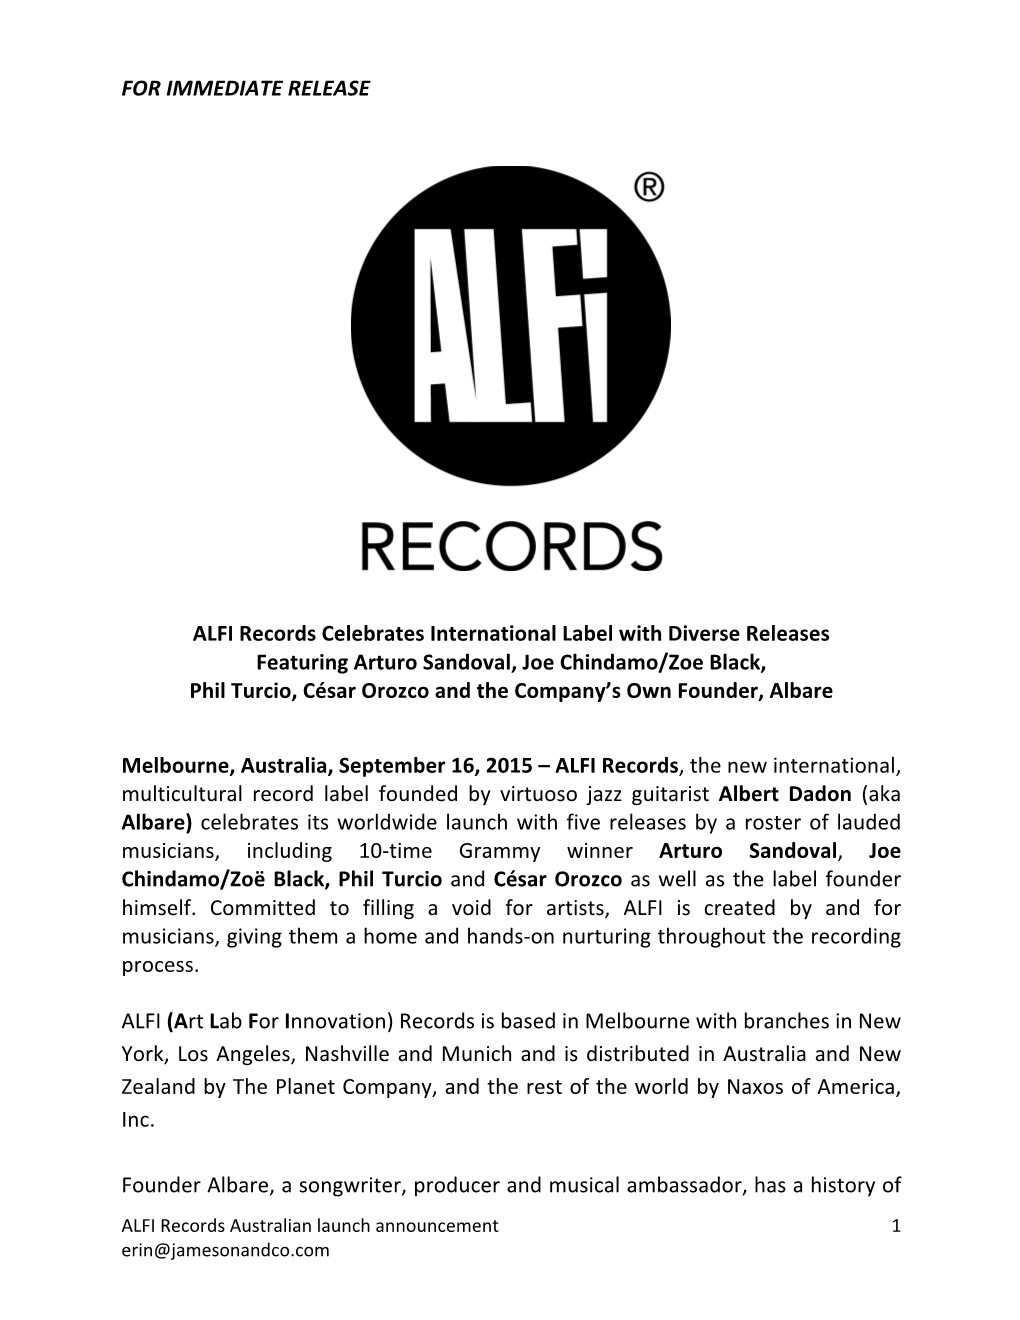 FOR IMMEDIATE RELEASE ALFI Records Celebrates International